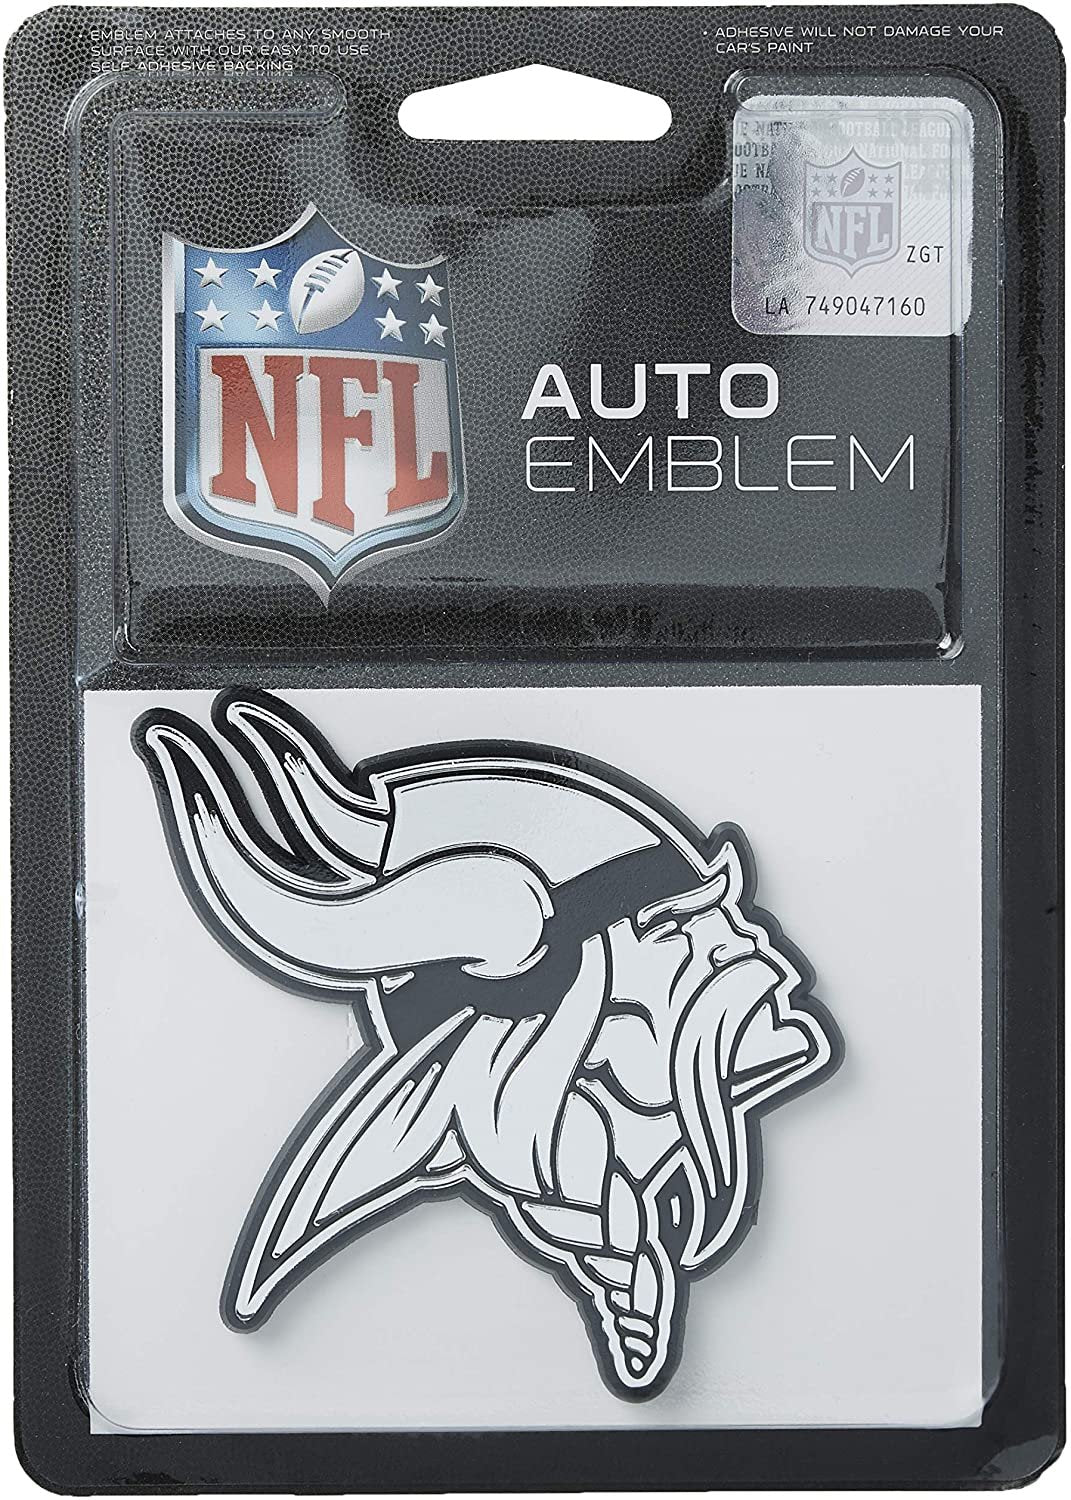 Minnesota Vikings Auto Emblem, Silver Chrome Color, Raised Molded Plastic, 3.5 Inch, Adhesive Tape Backing